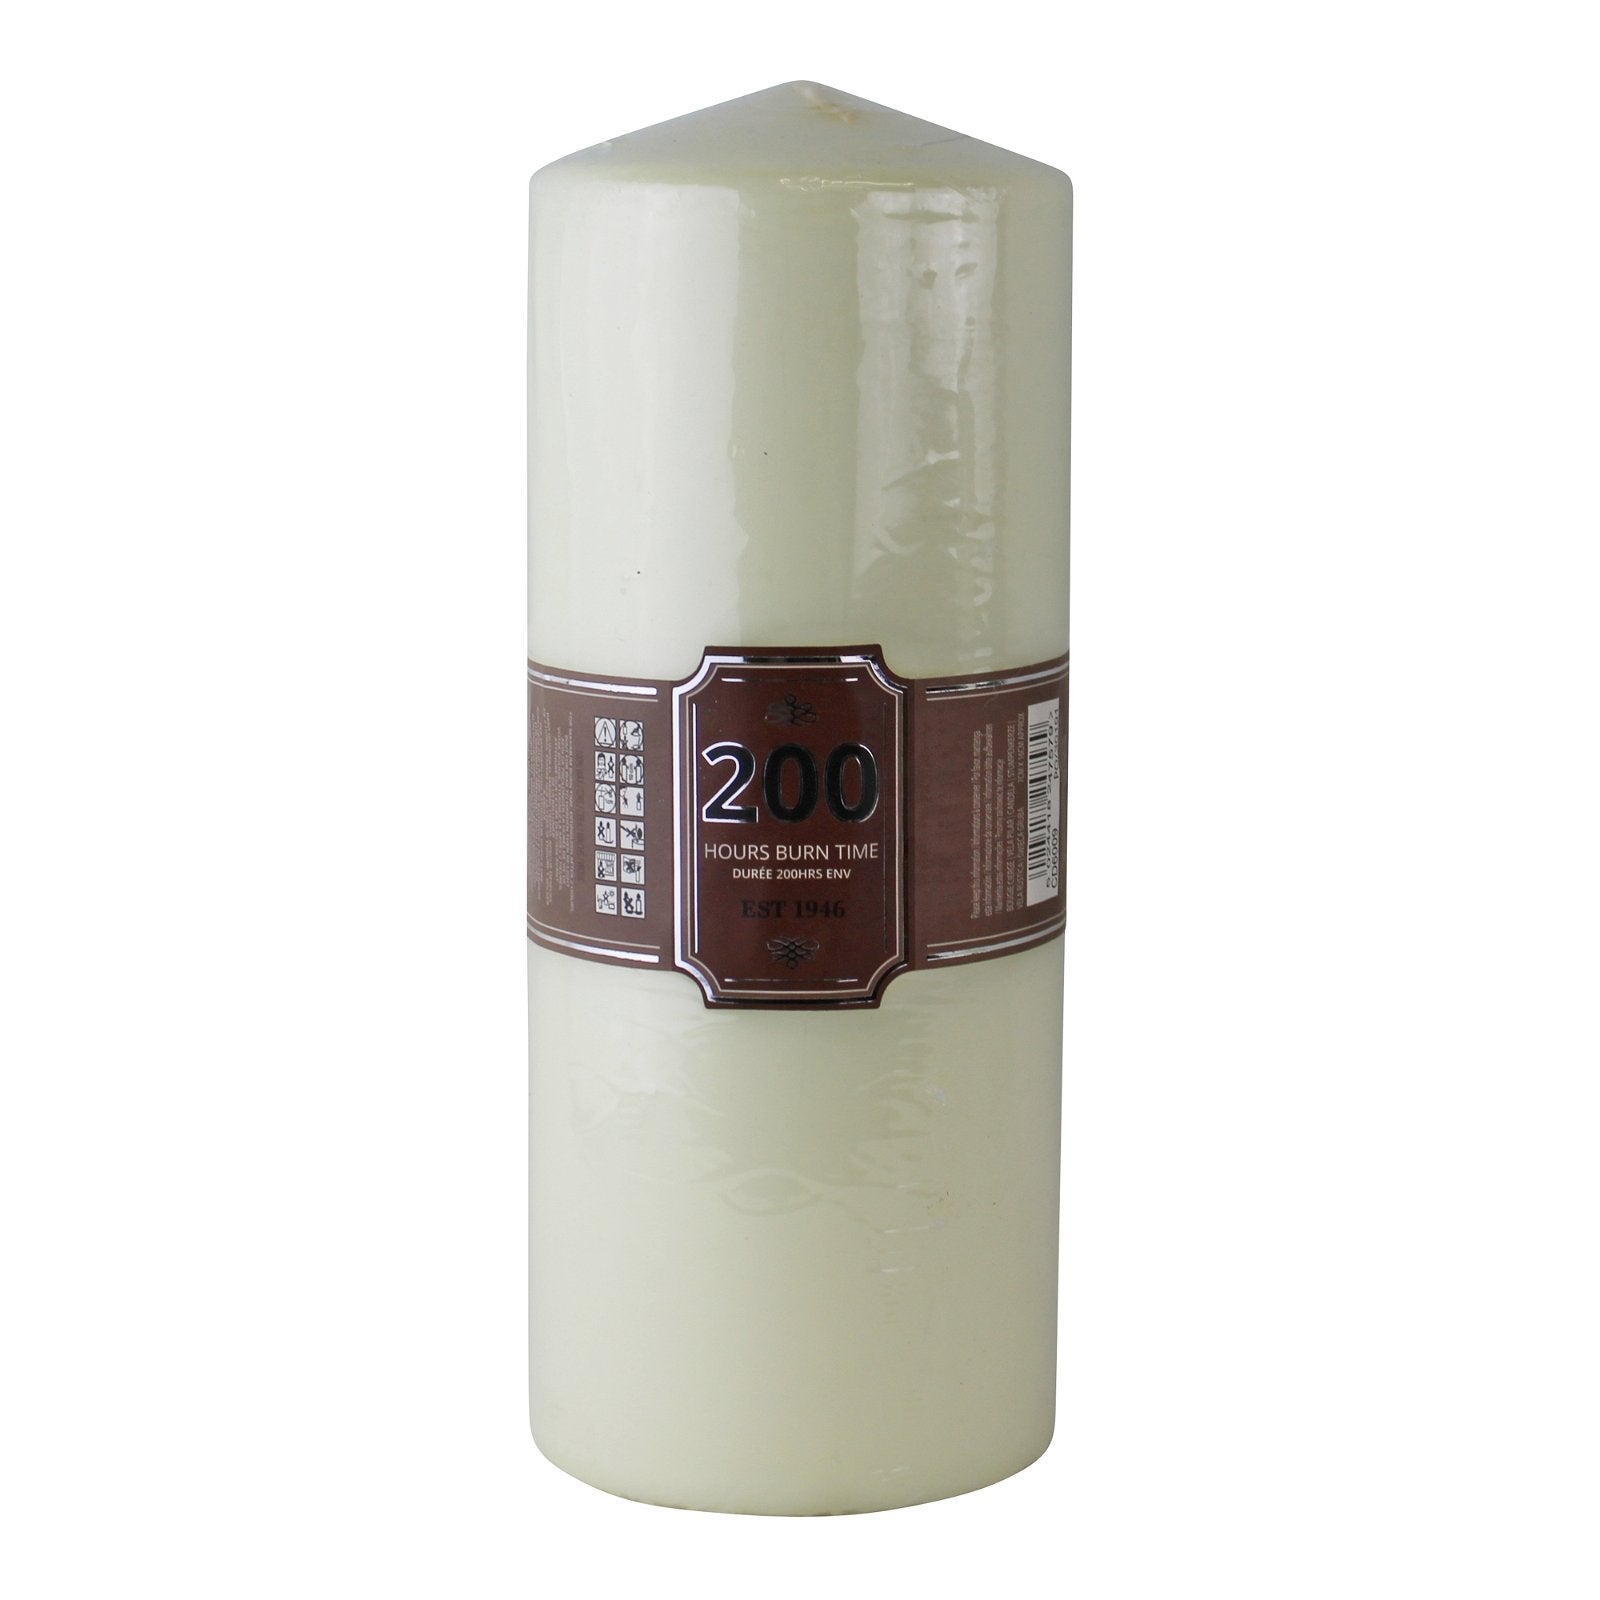 Cream Pillar Candle, 200hr Burn Time - Kaftan direct